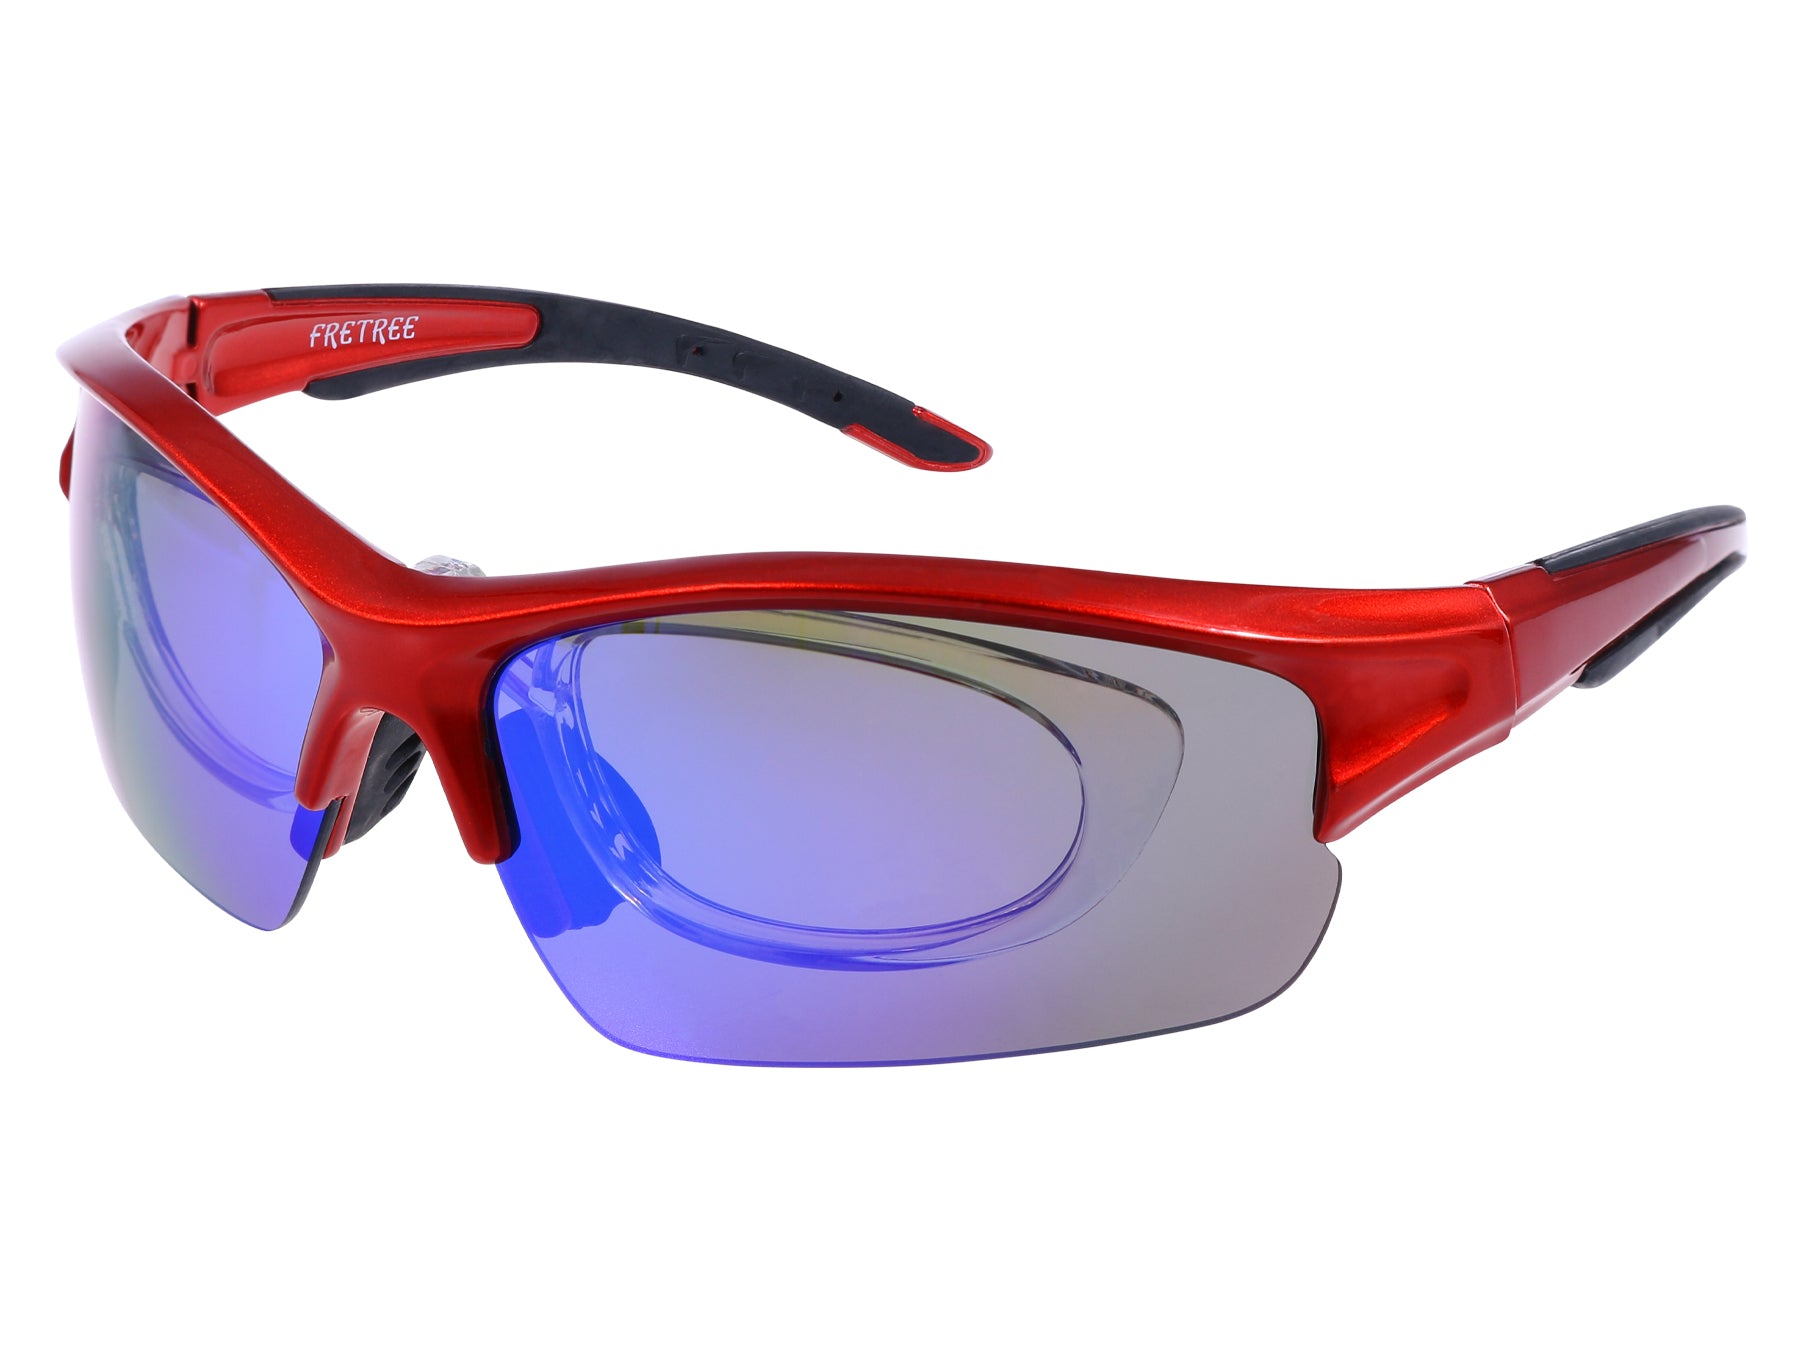 Fishing sunglasses  Optilabs - Performance Prescription Eyewear for Sport